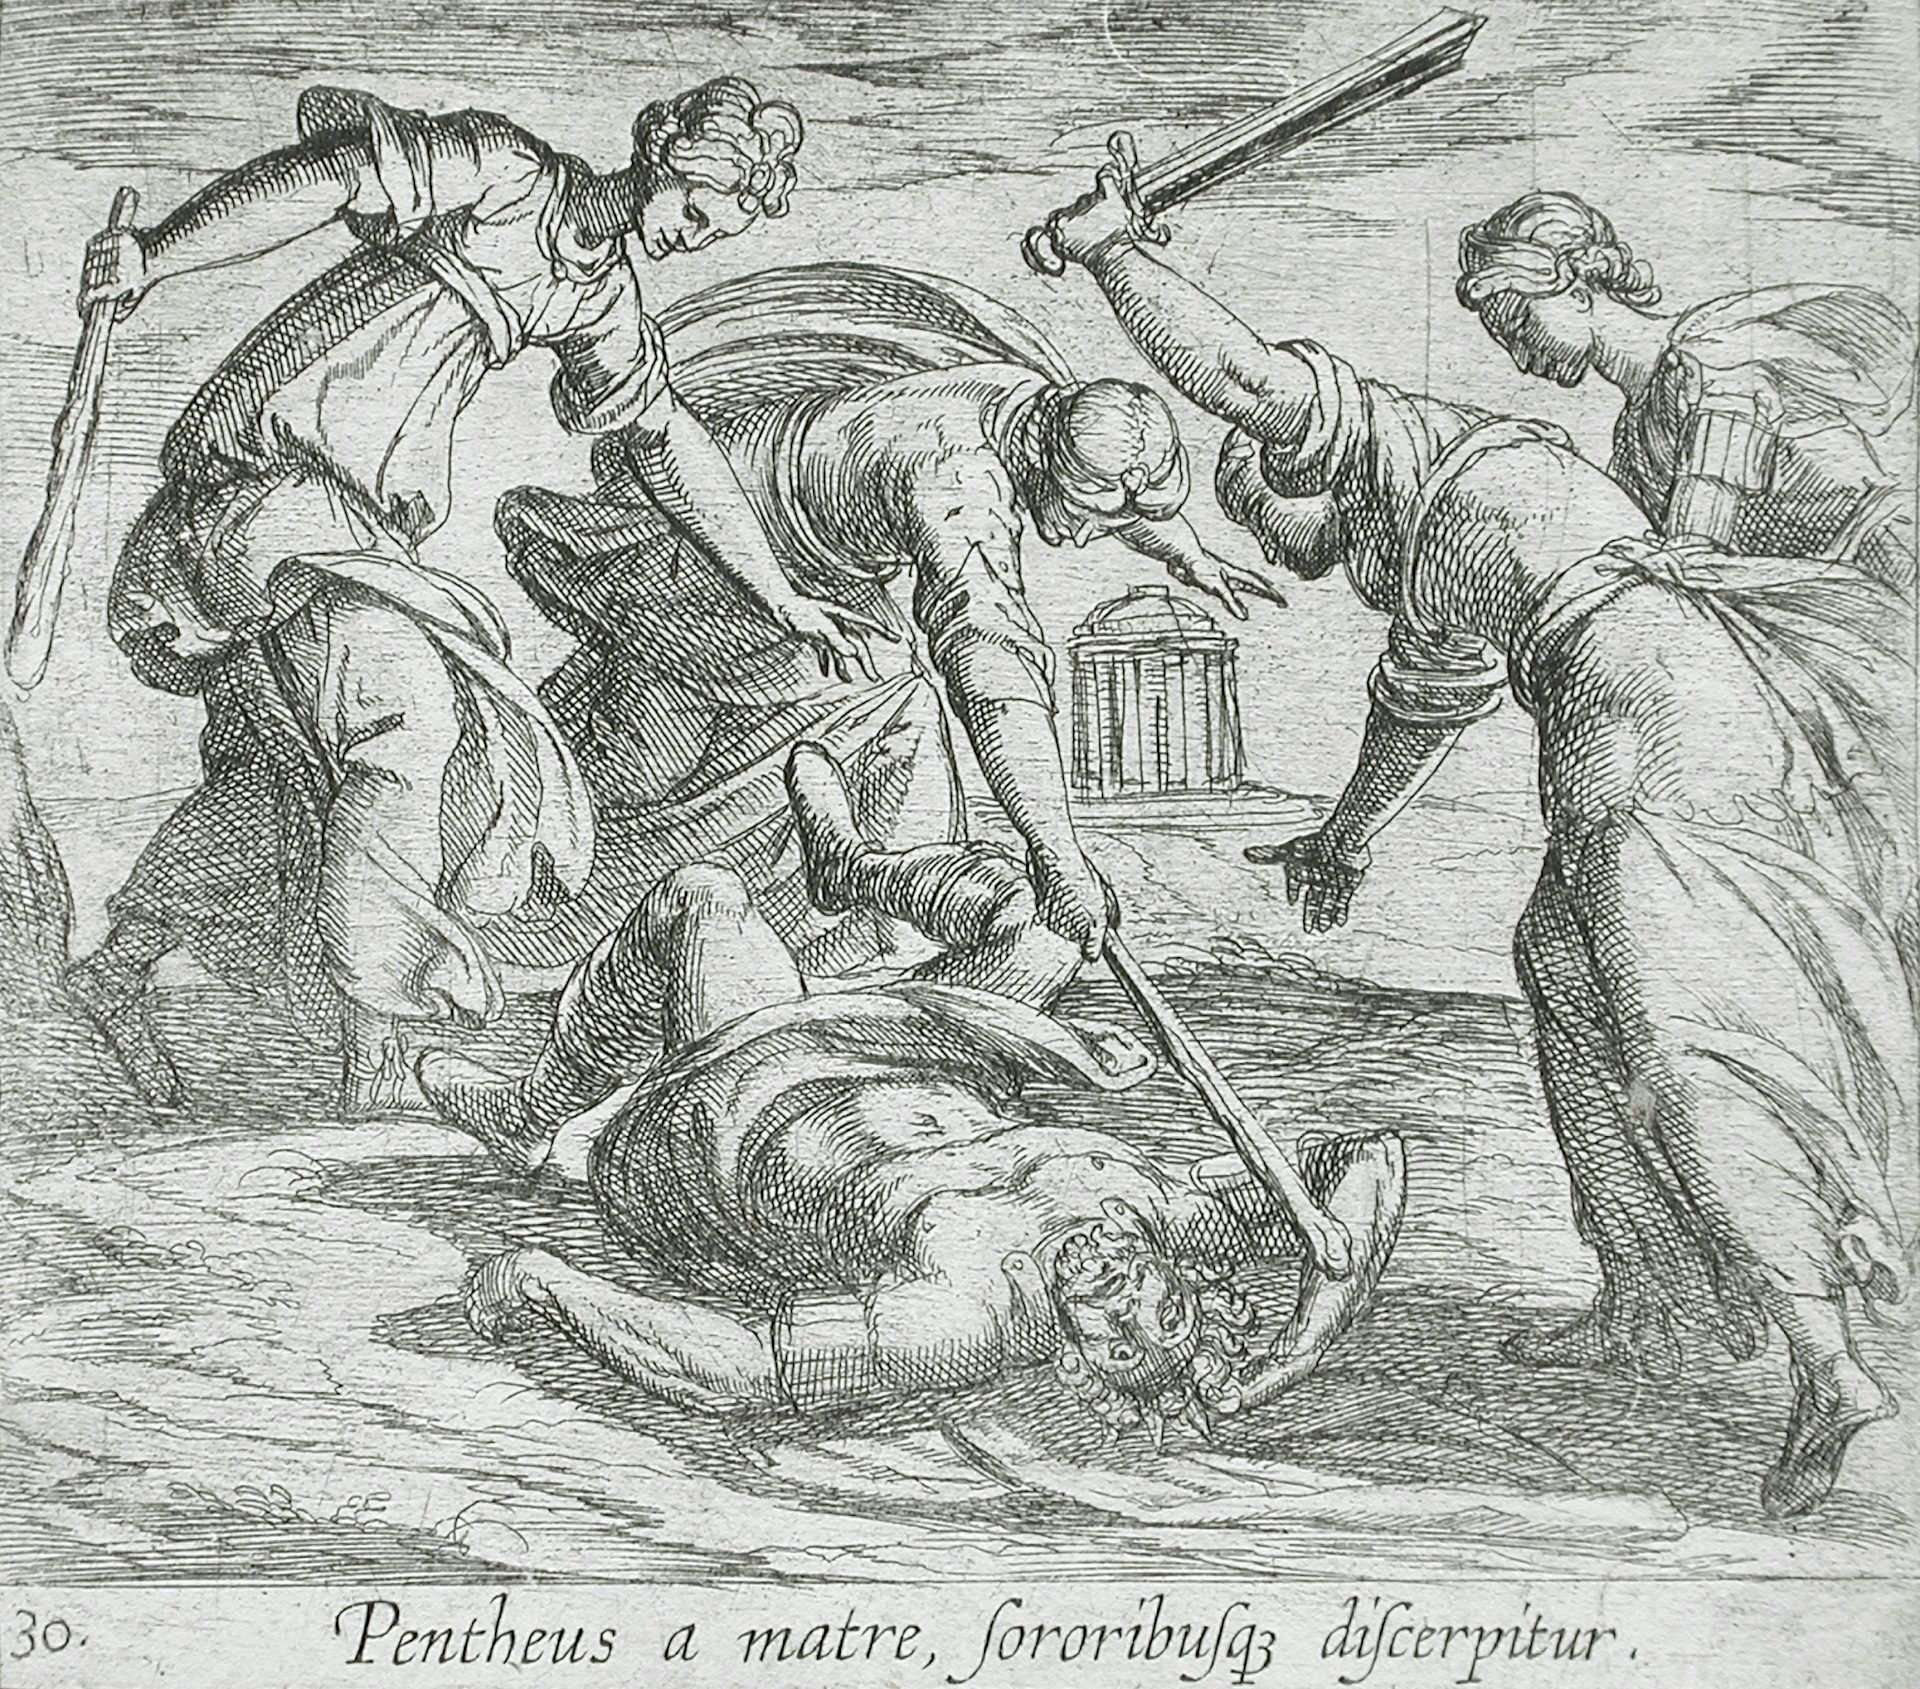 The Death of Pentheus by Antonio Tempesta and Wilhelm Janson